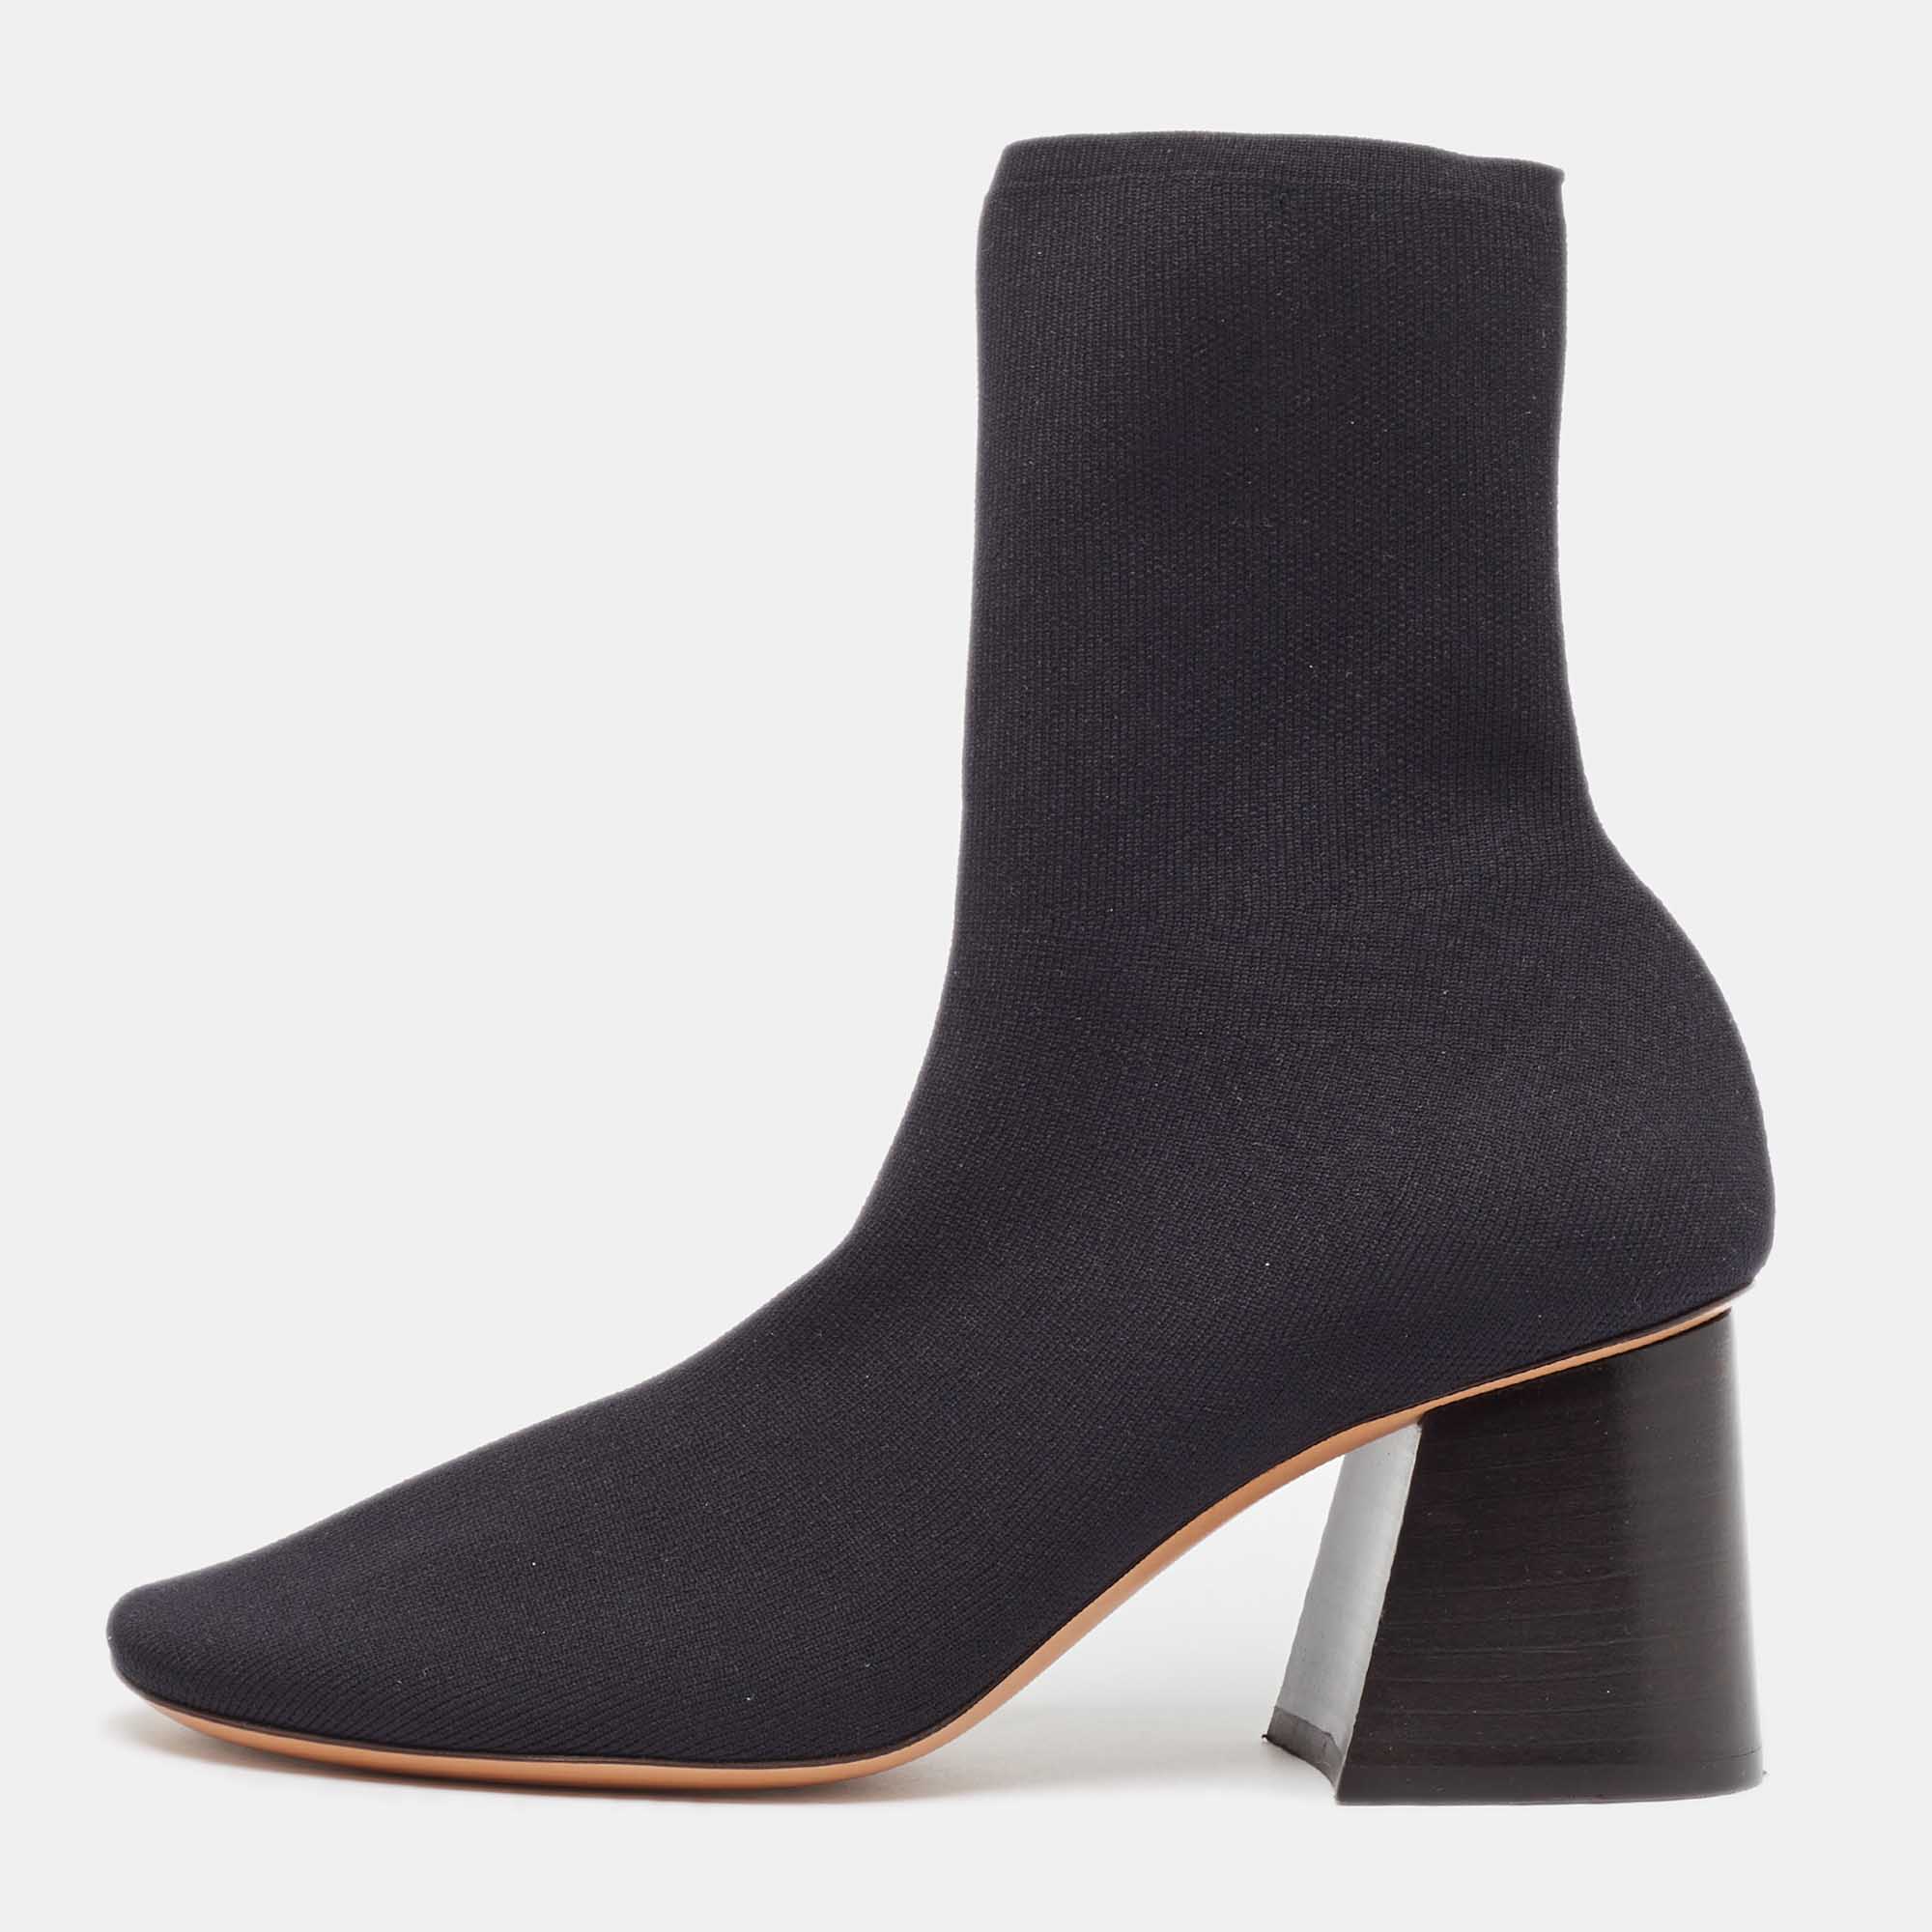 Celine black knit fabric ankle boots size 35